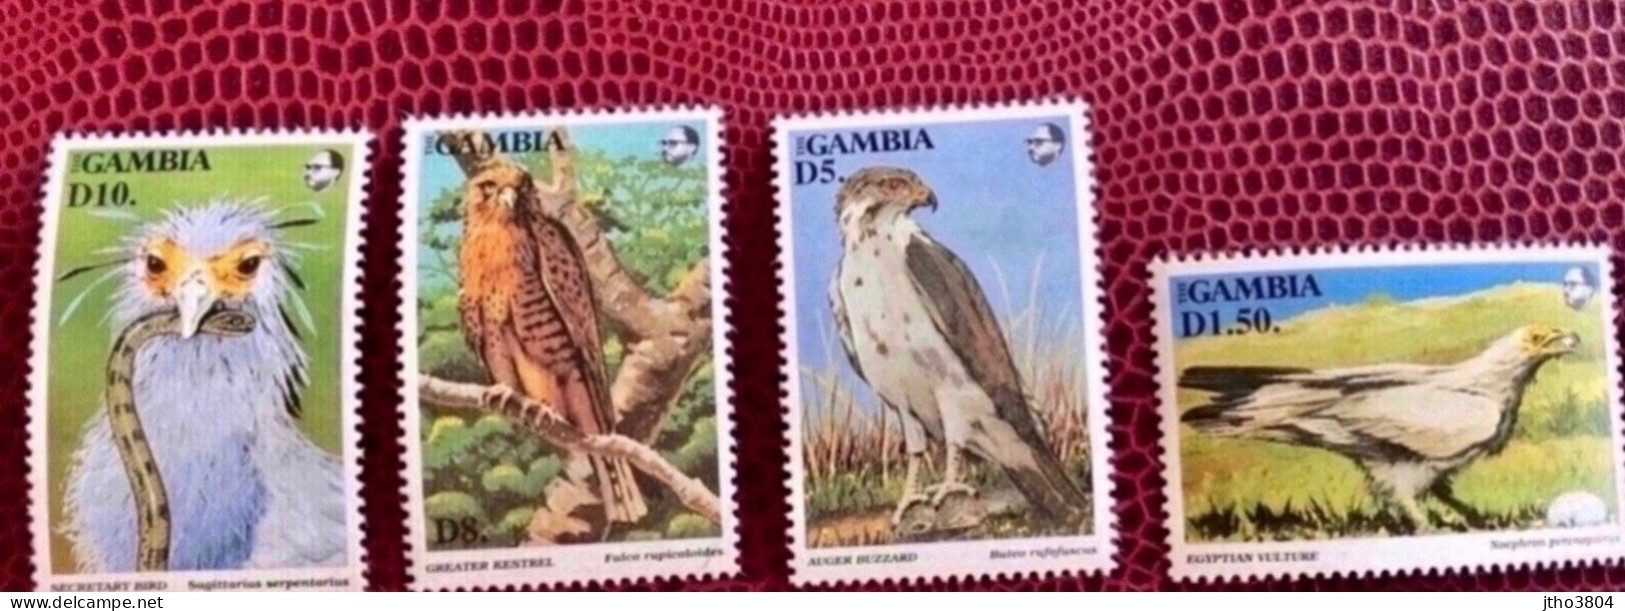 GAMBIE 1993 4 V Neuf MNH ** YT 1319 1320 1321 1322 Rapace Ucello Oiseau Bird Pájaro Vogel THE GAMBIA - Adler & Greifvögel